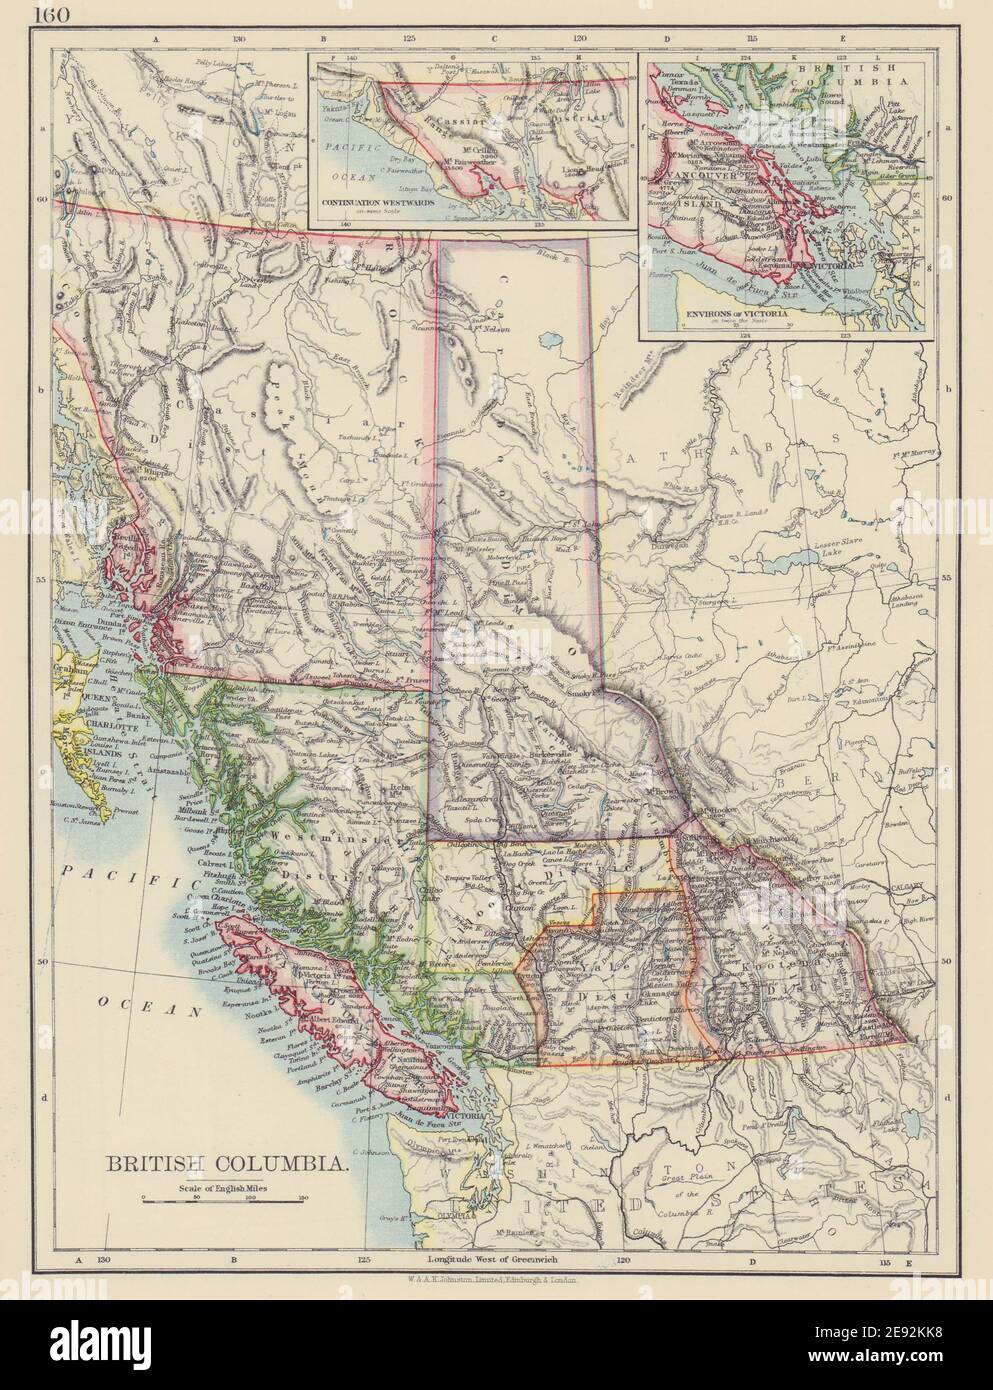 COLUMBIA BRITÁNICA. Mapa de provincia. Ferrocarriles. Isla de Vancouver. JOHNSTON 1901 Foto de stock